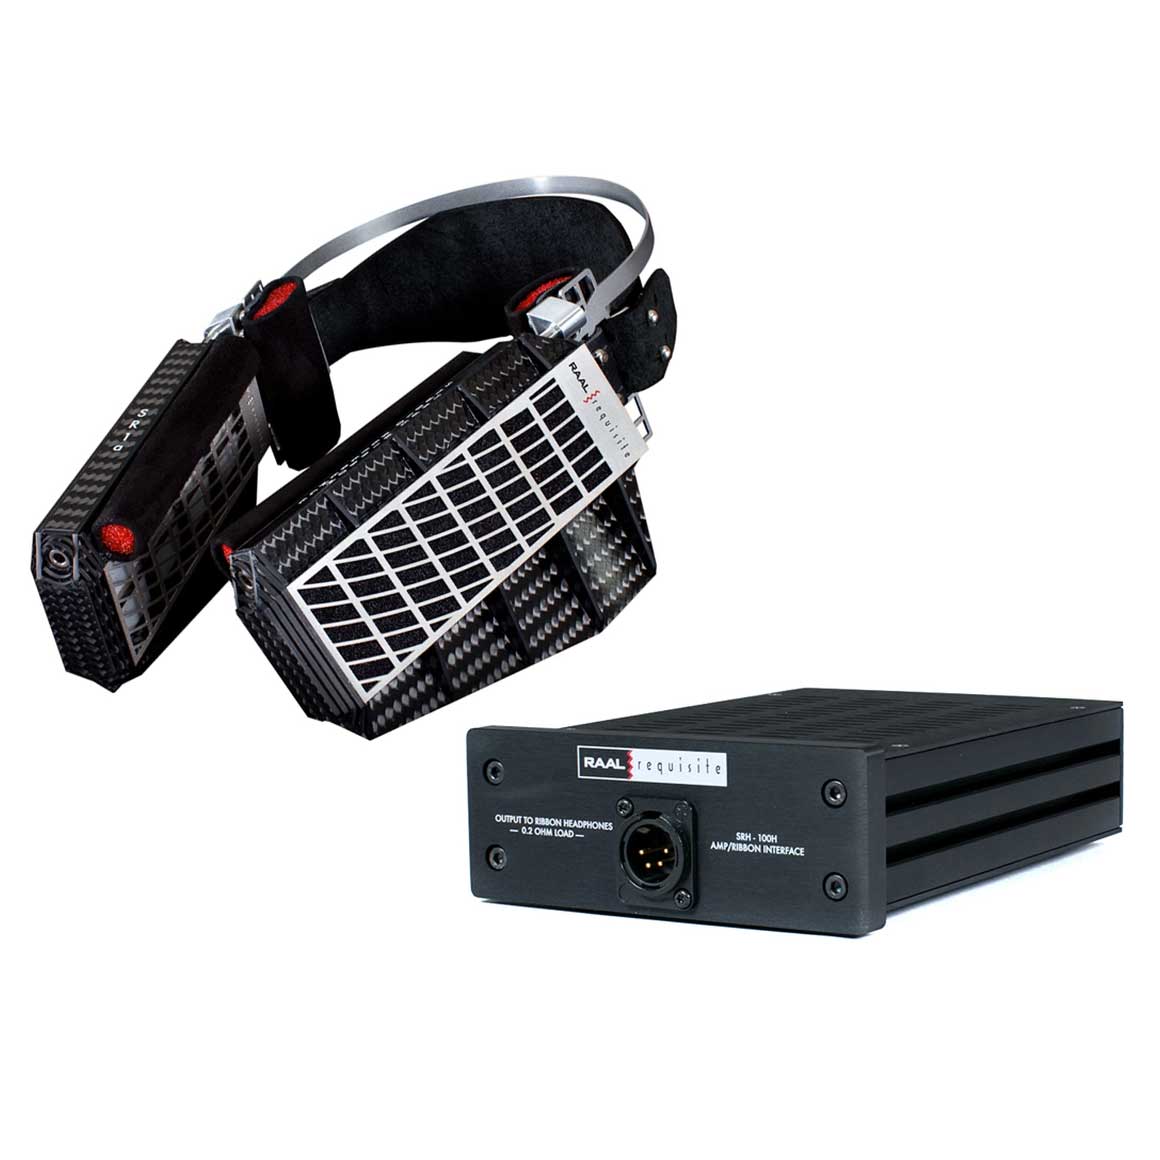 Headphone-Zone-RAAL-requisite - SR1a Earfield Monitors-Speaker Amp Interface Box